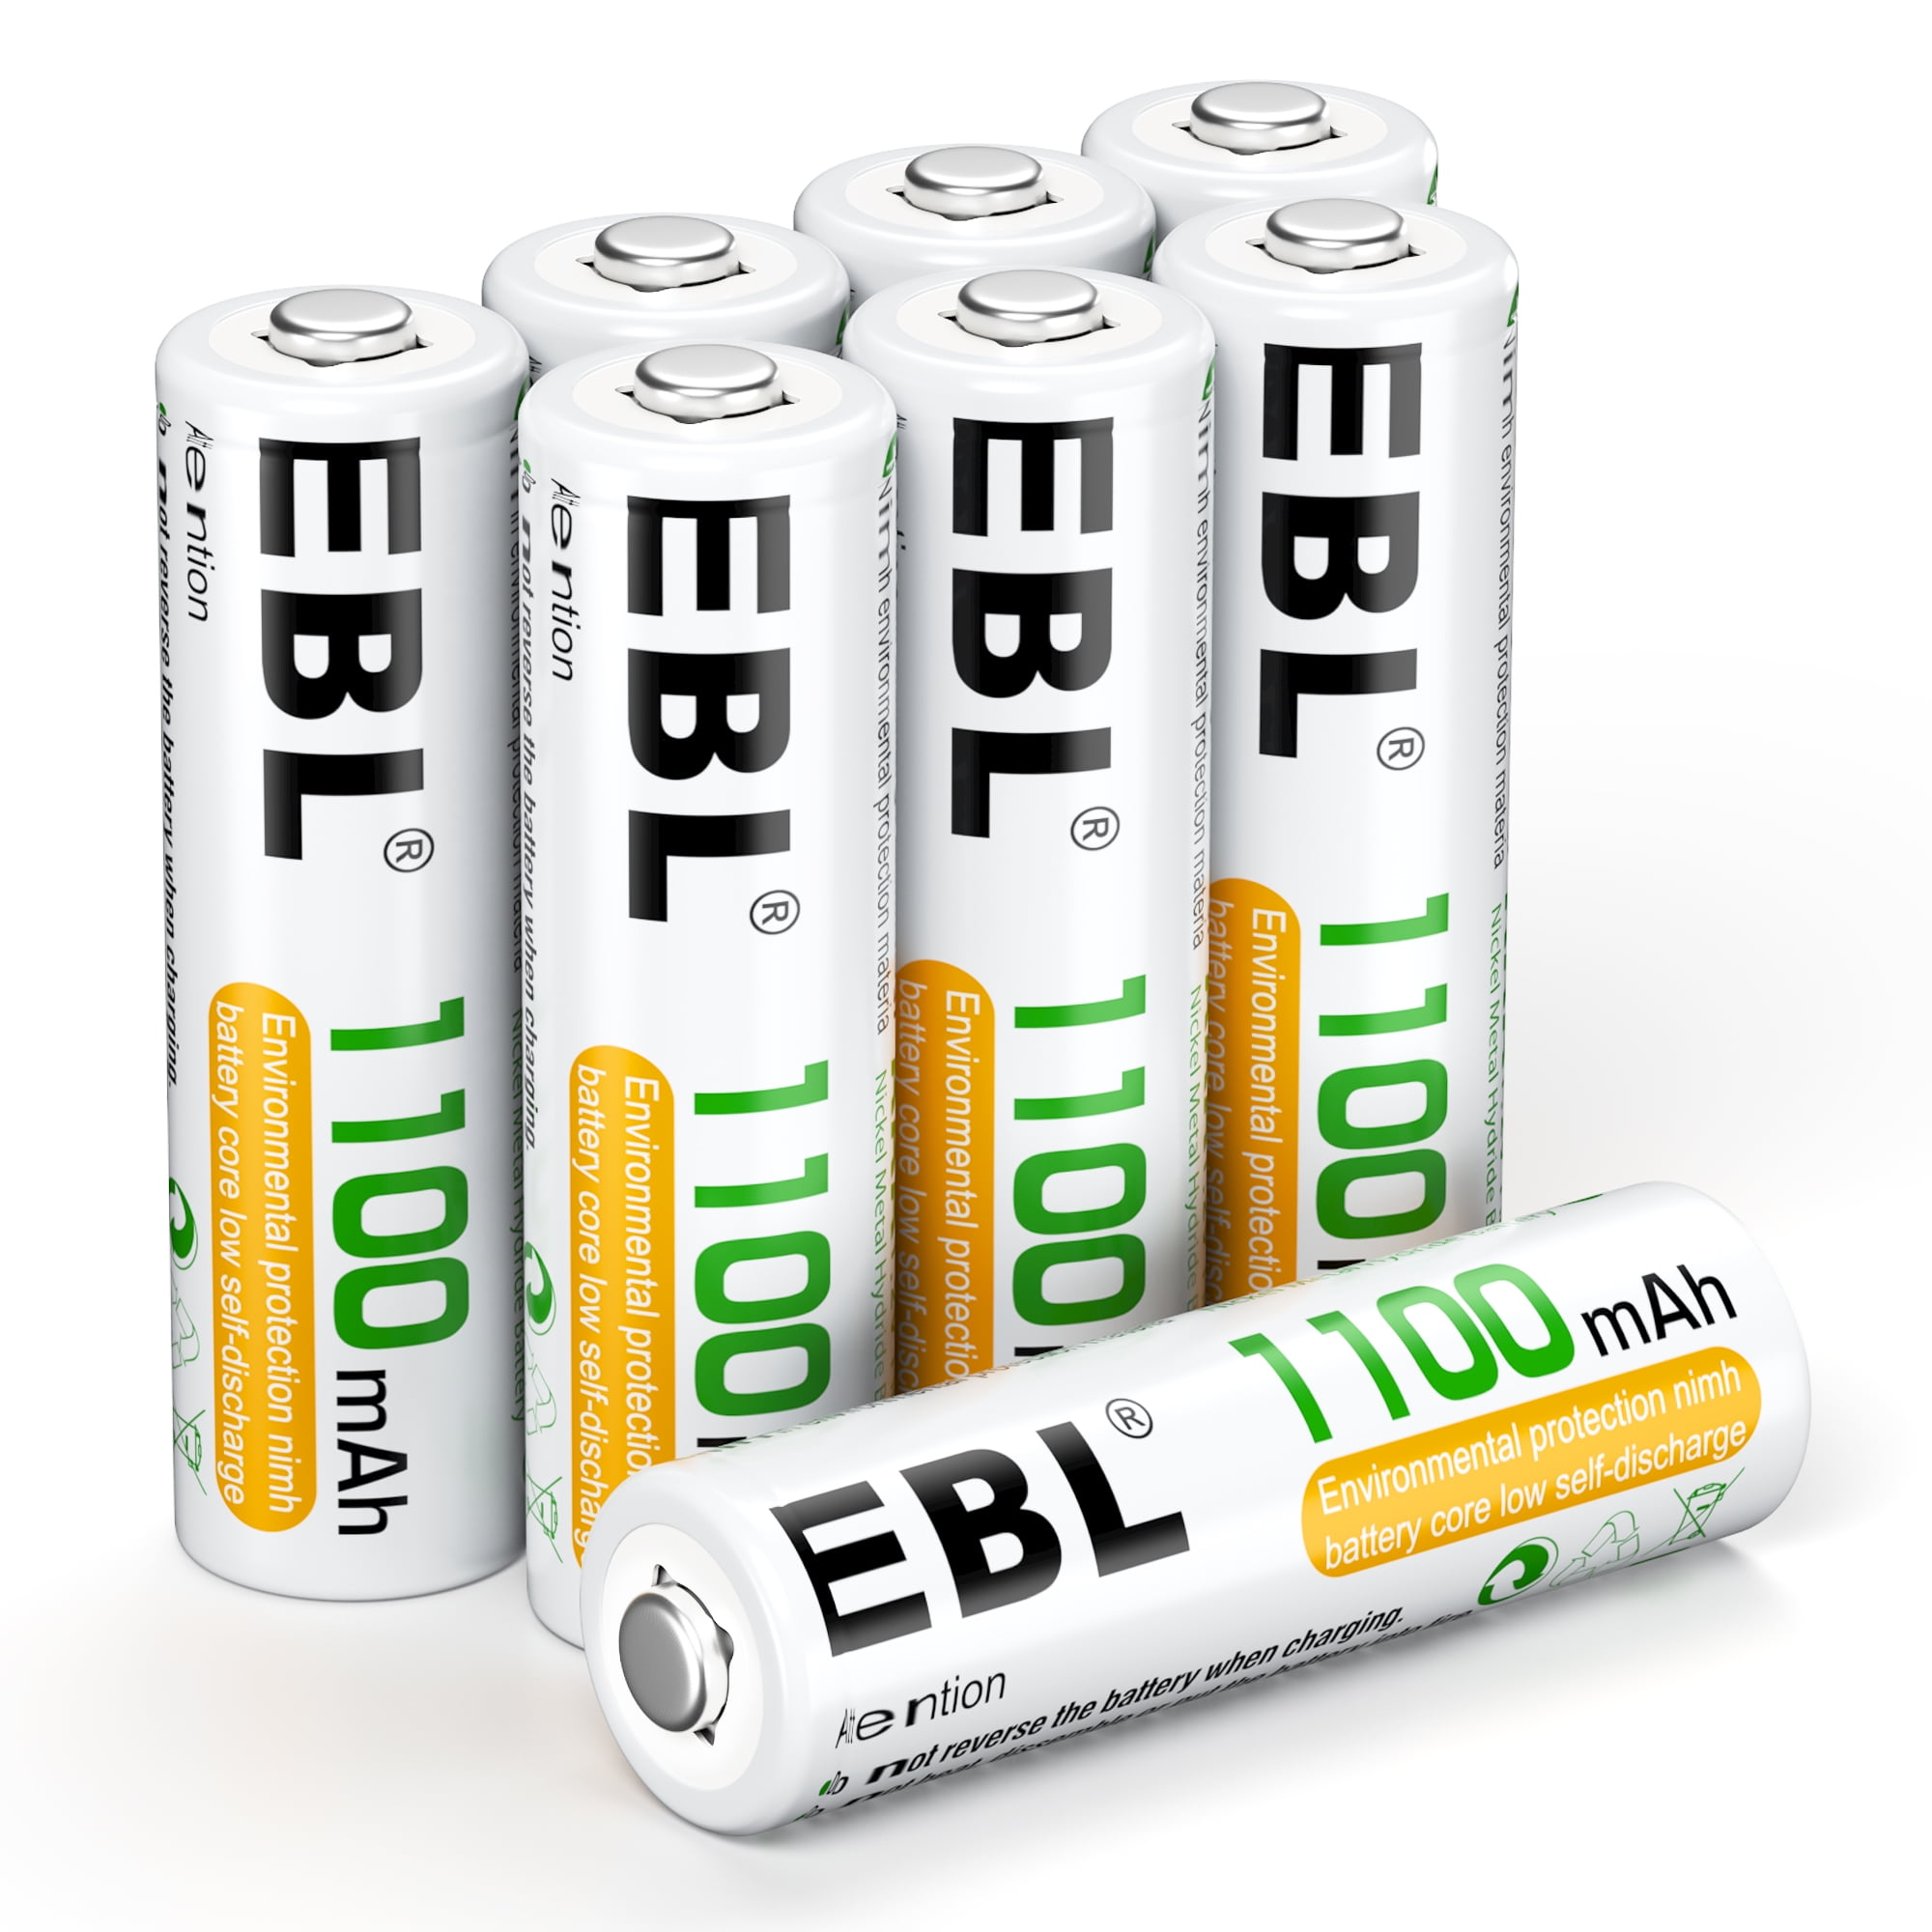 EBL AAA Rechargeable Ni-MH Batteries 1100mAh